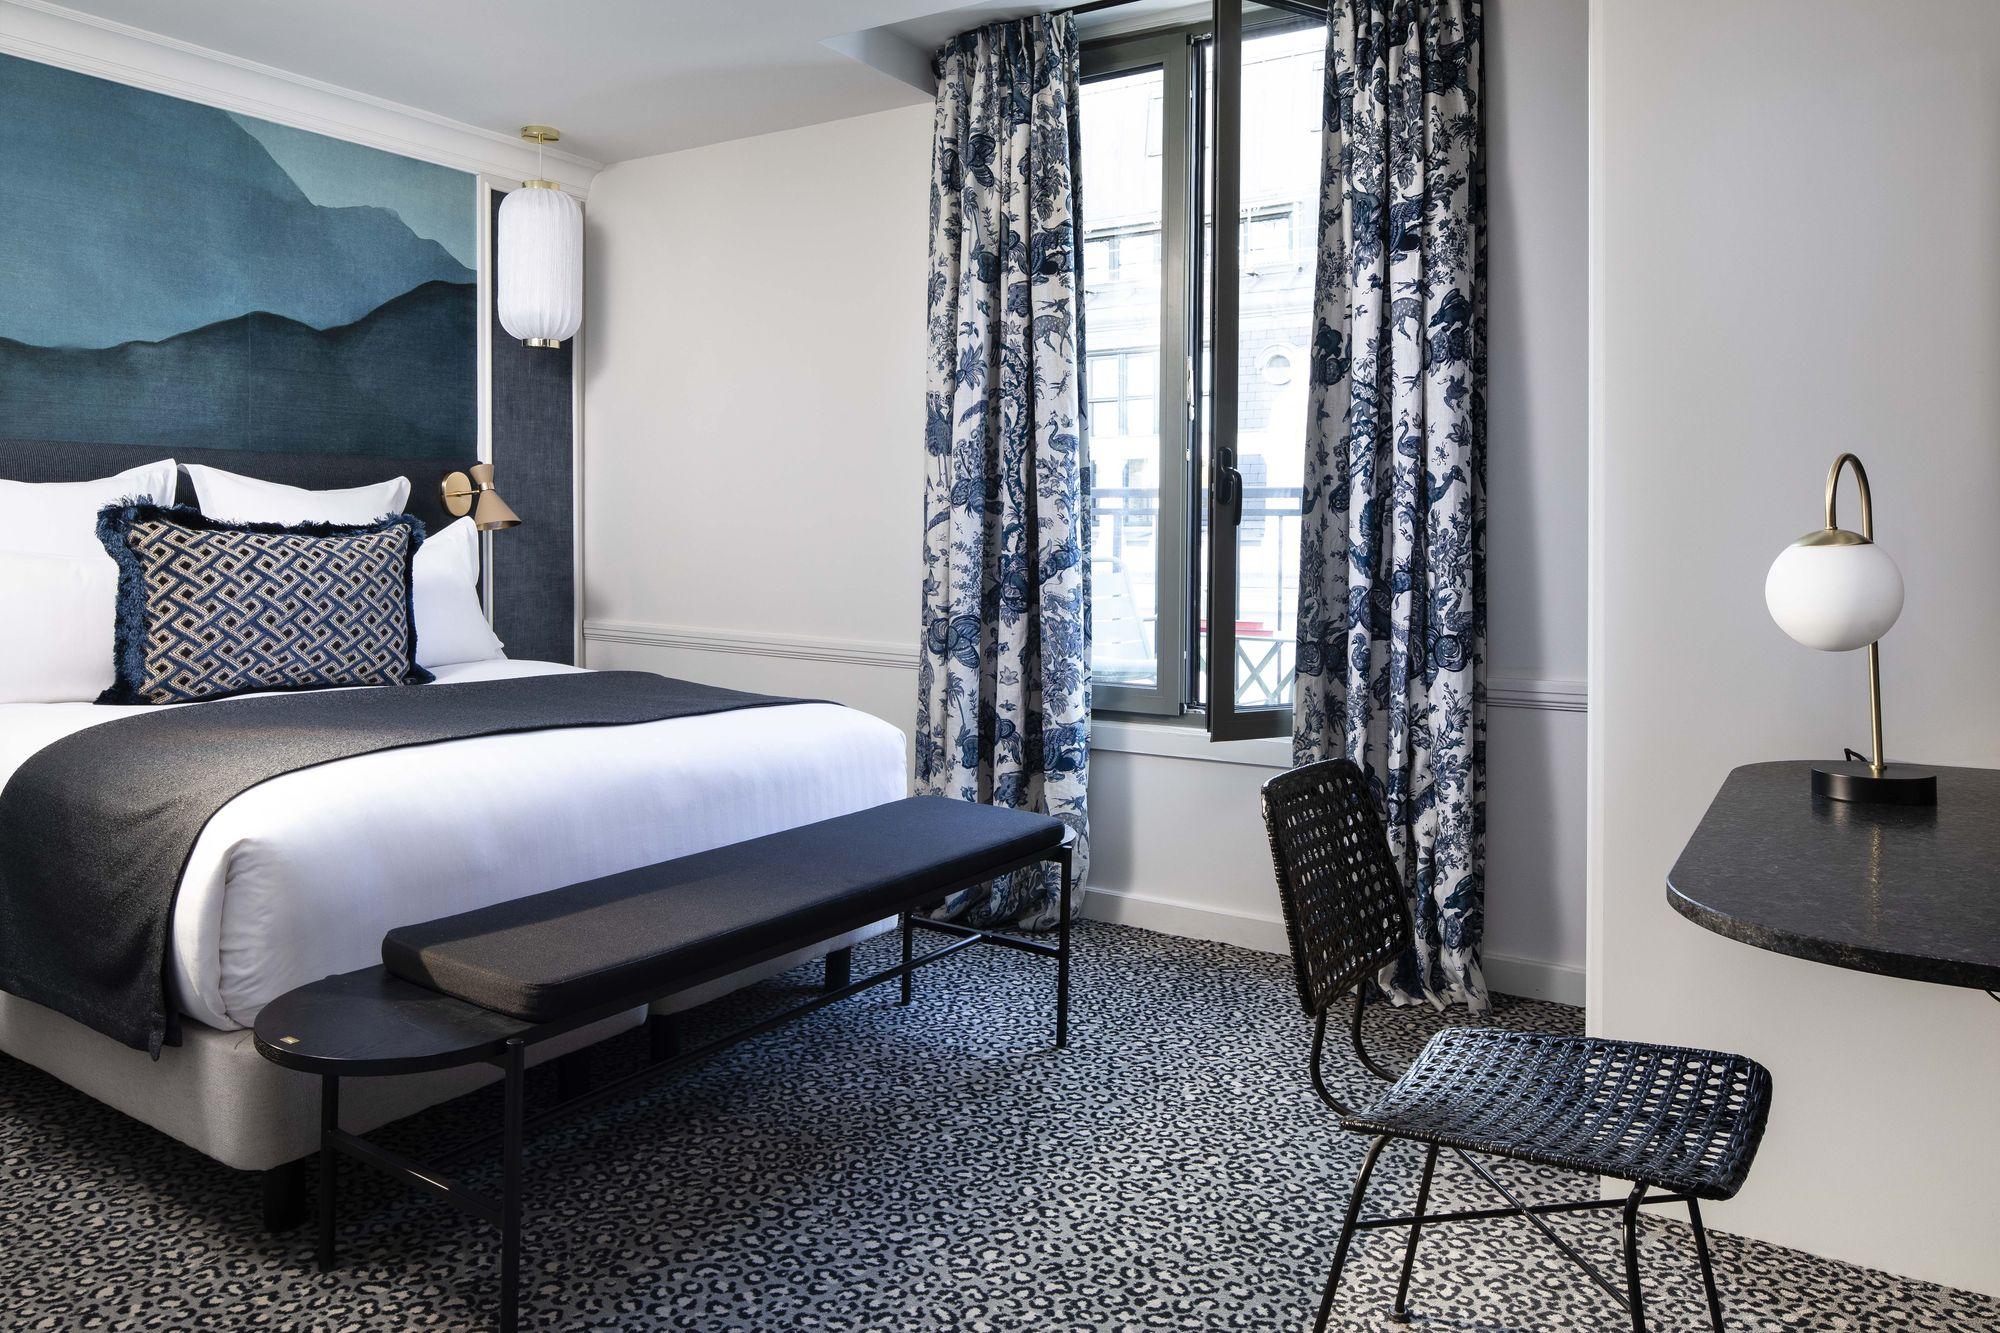 Hotel Gramont Paris, double bedroom with terrasse